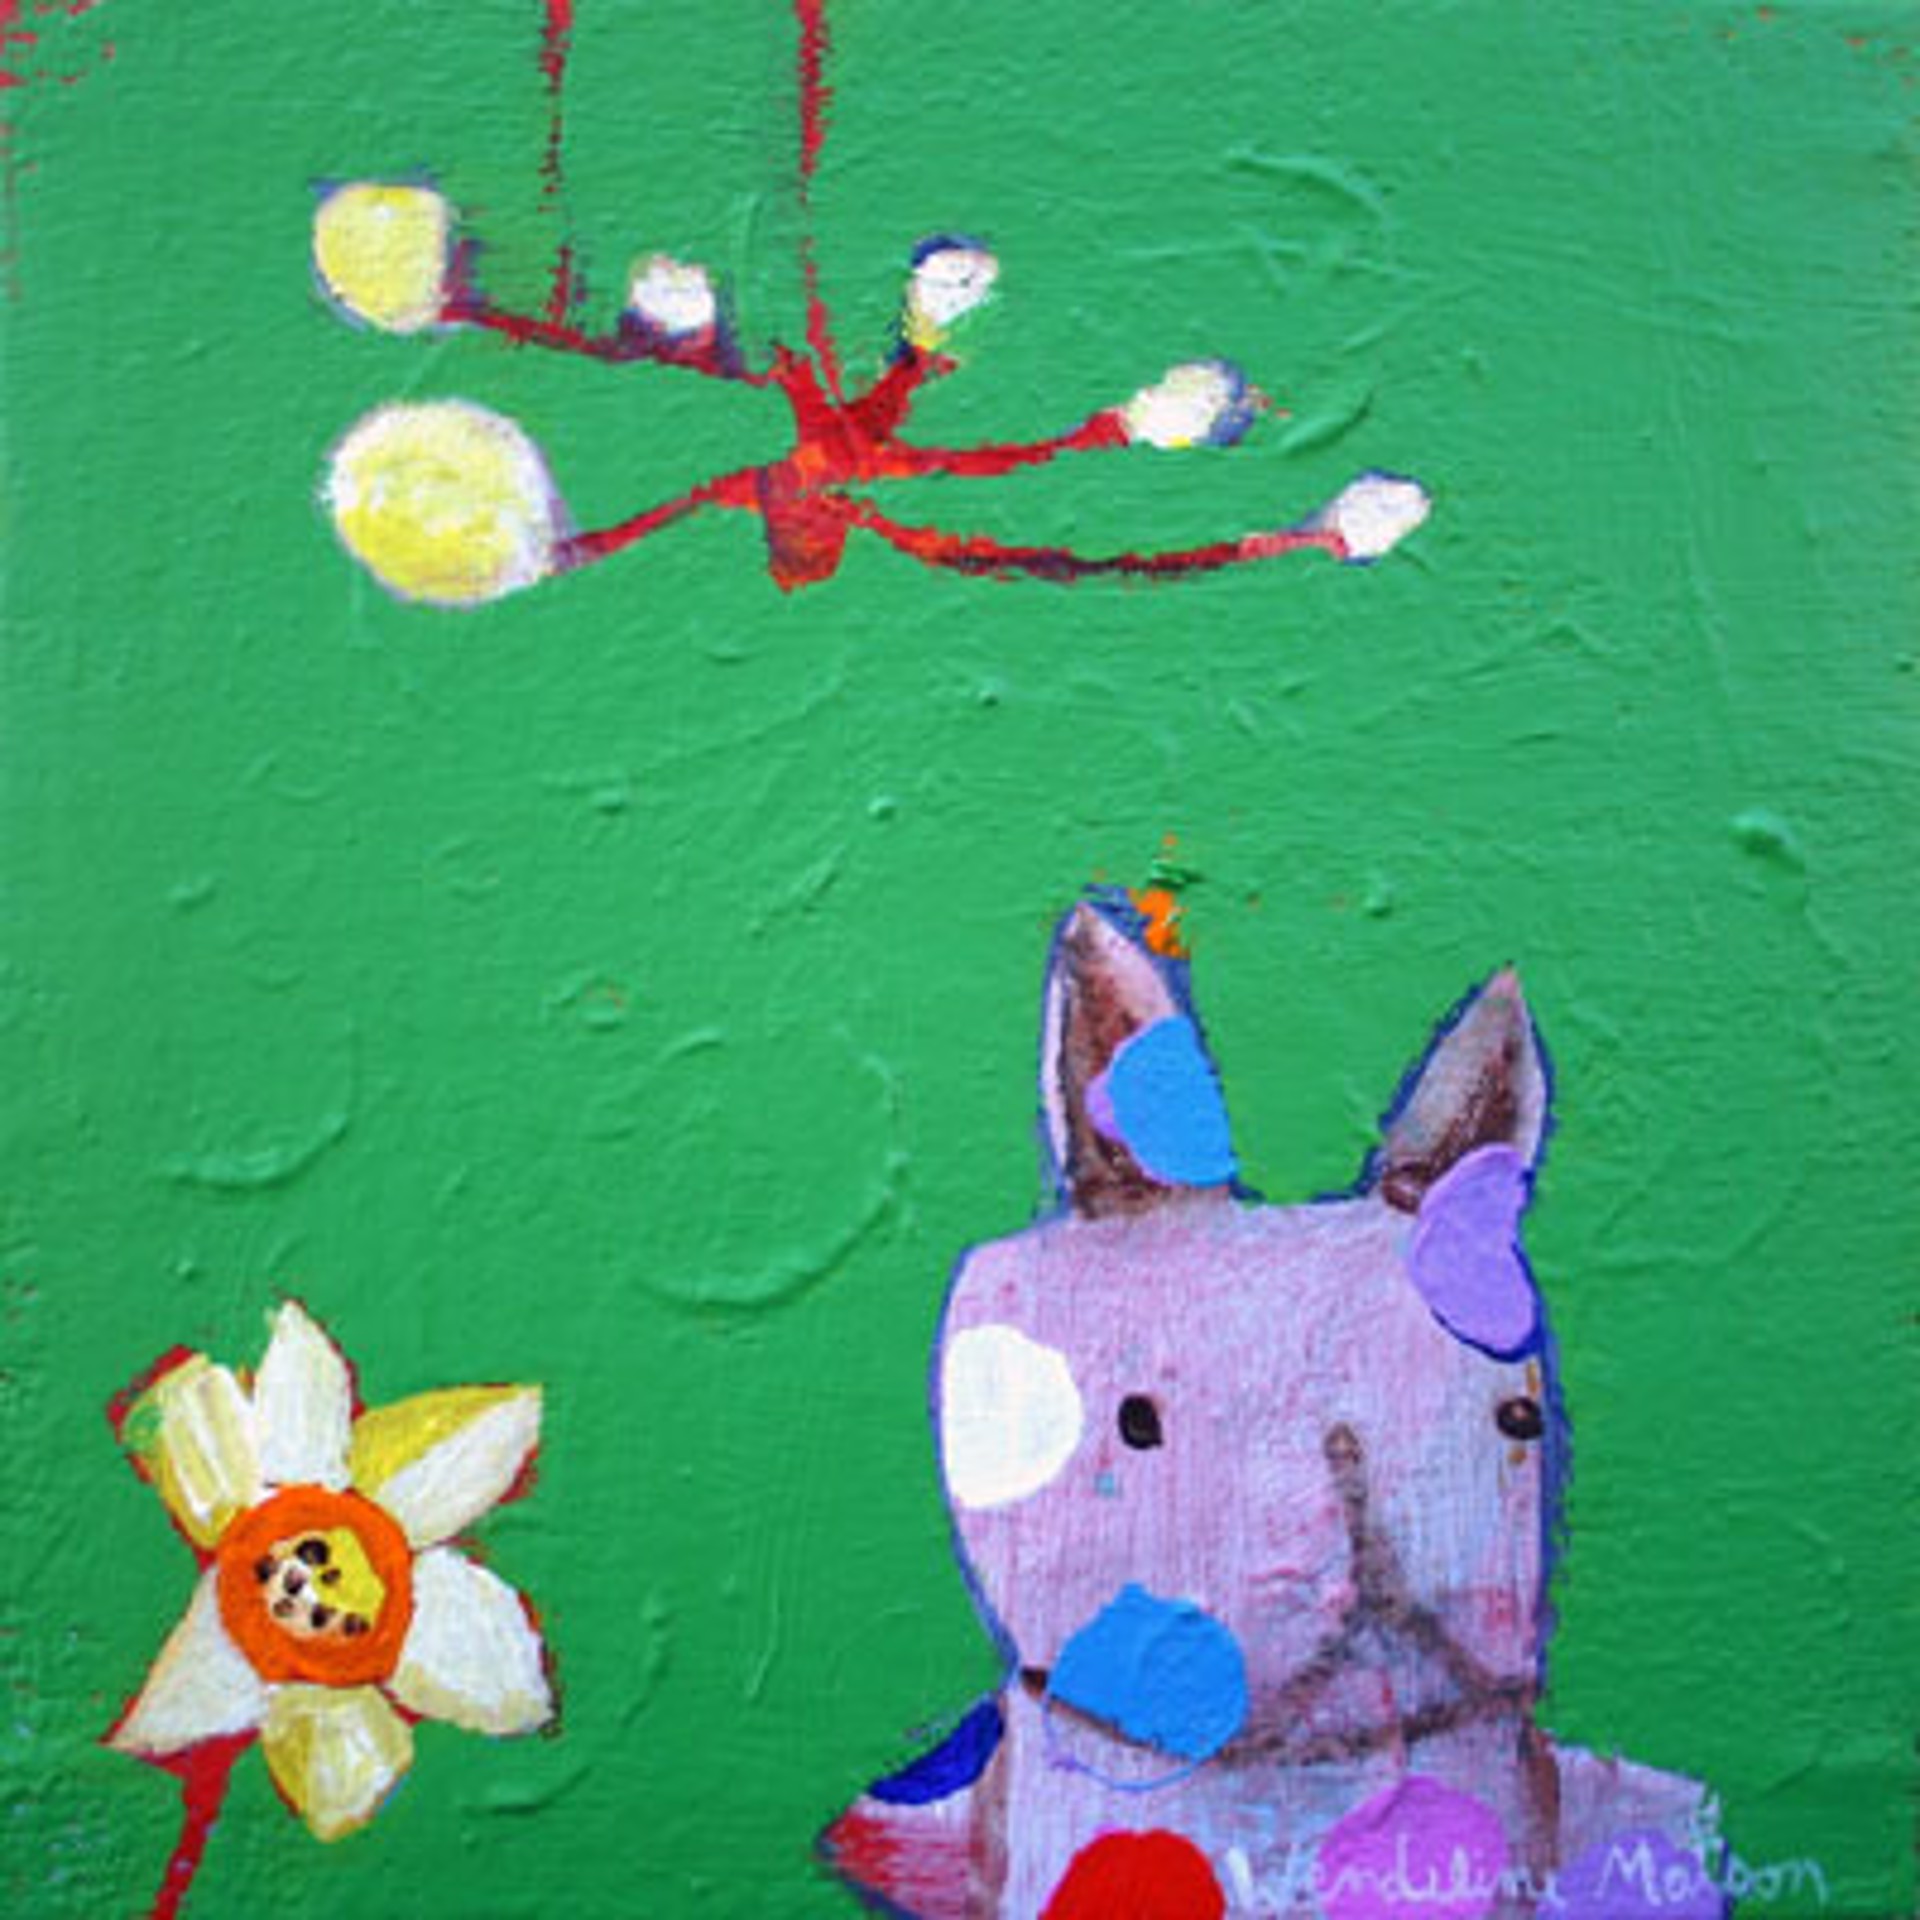 Bunny by Wendeline Simpson Matson